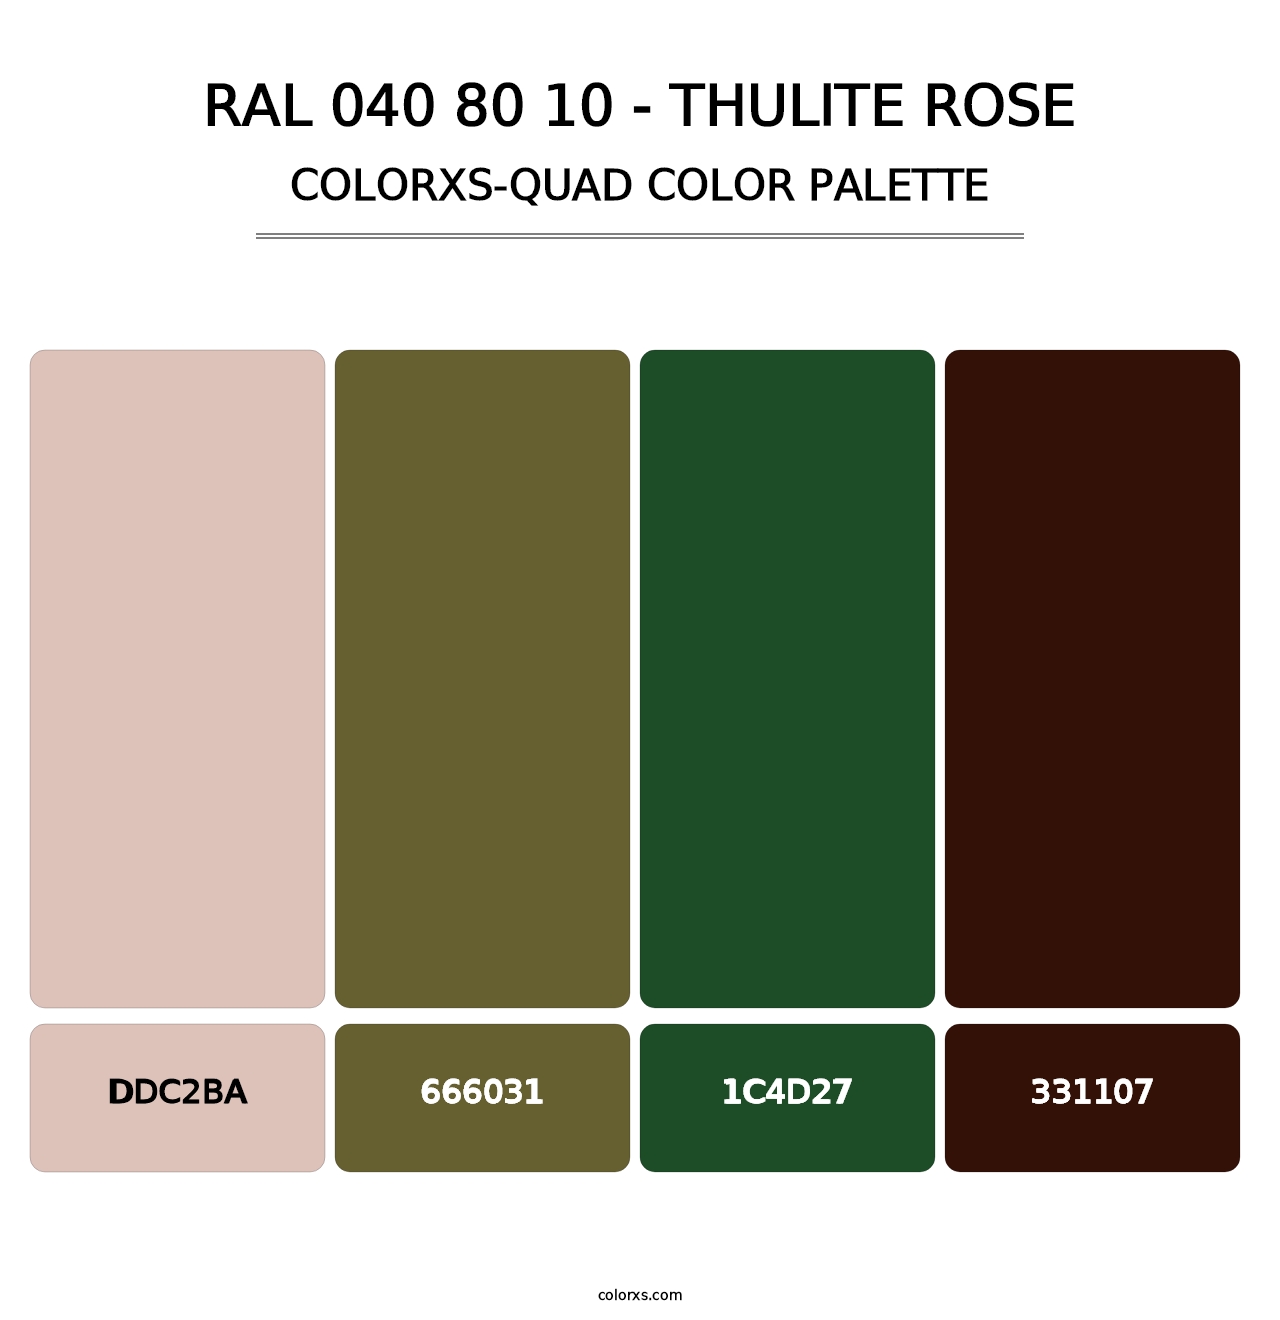 RAL 040 80 10 - Thulite Rose - Colorxs Quad Palette